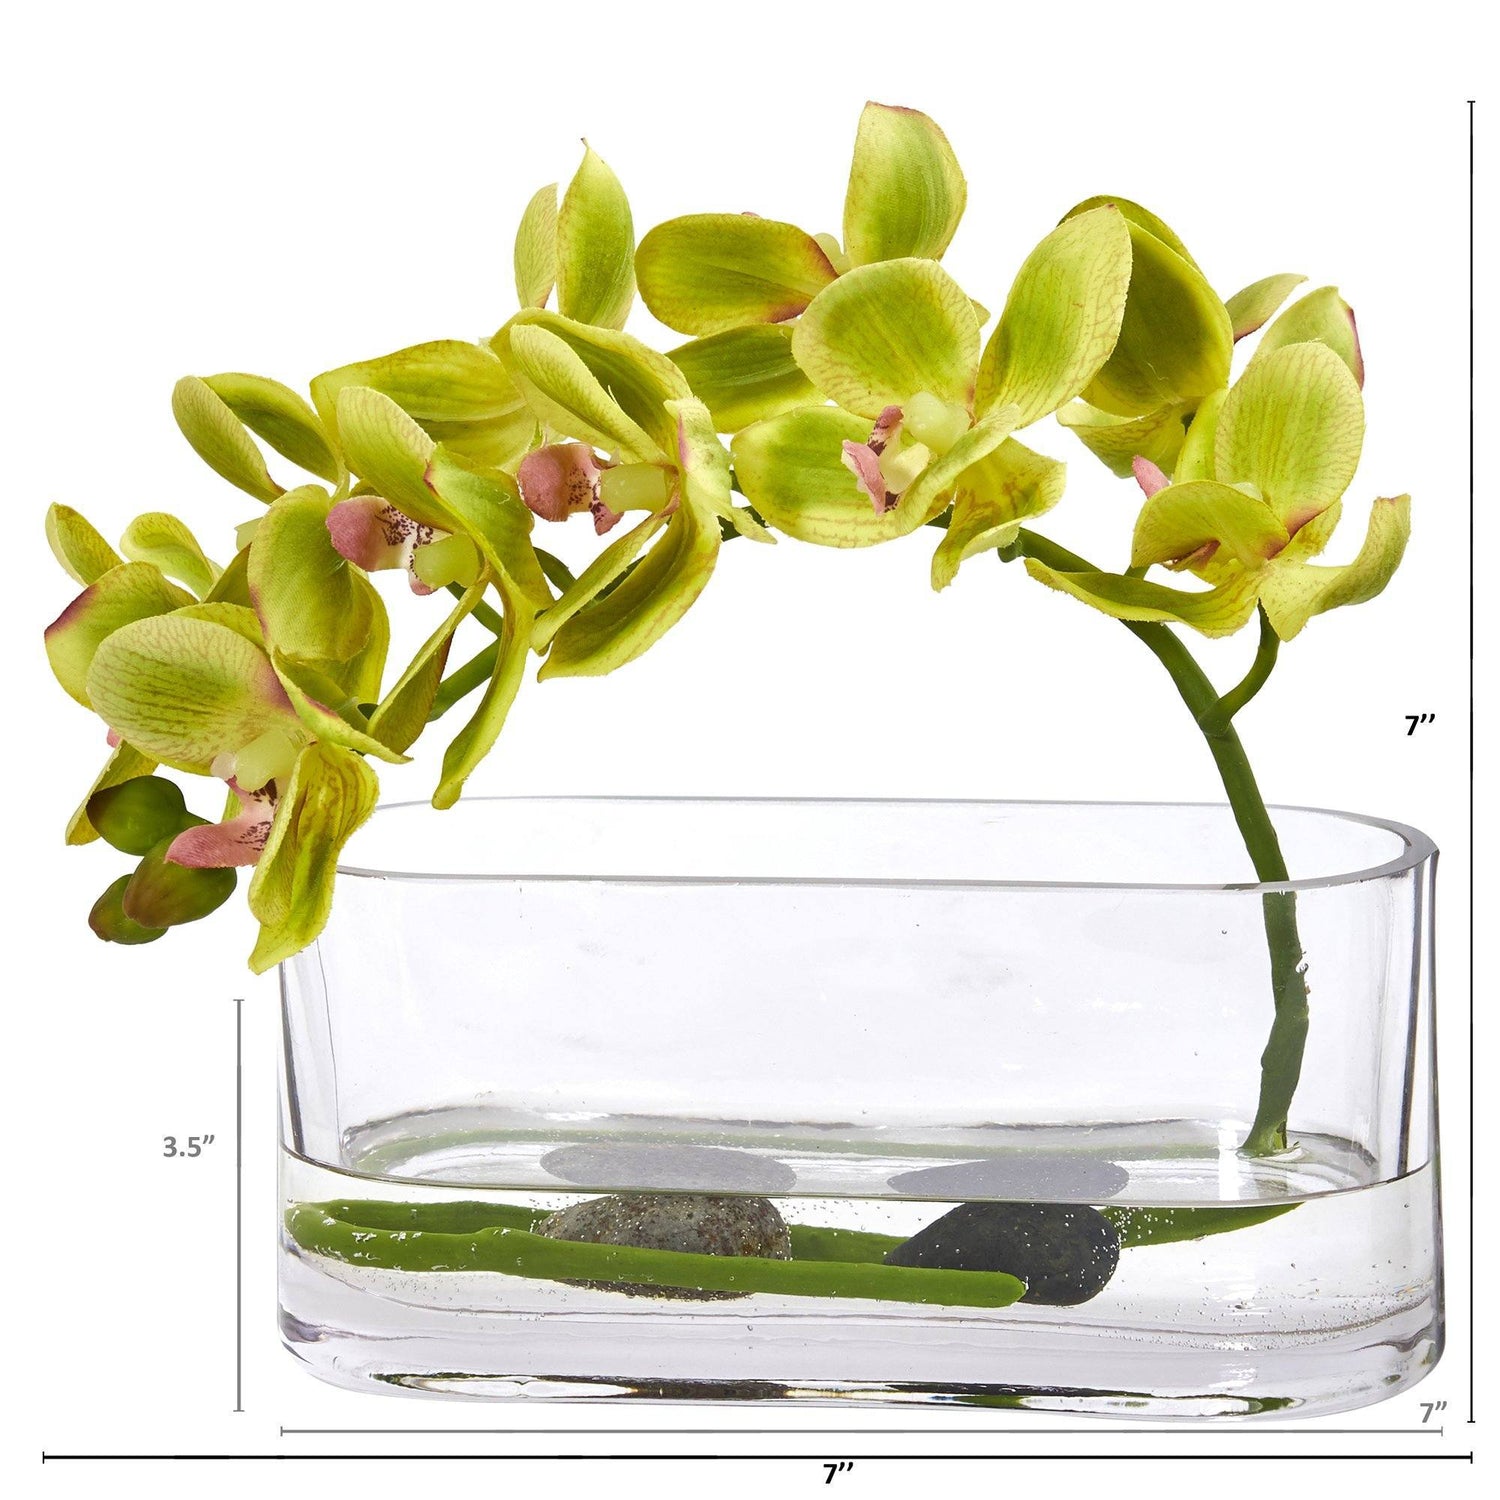 Phalaenopsis Orchid Artificial Arrangement in Glass Vase